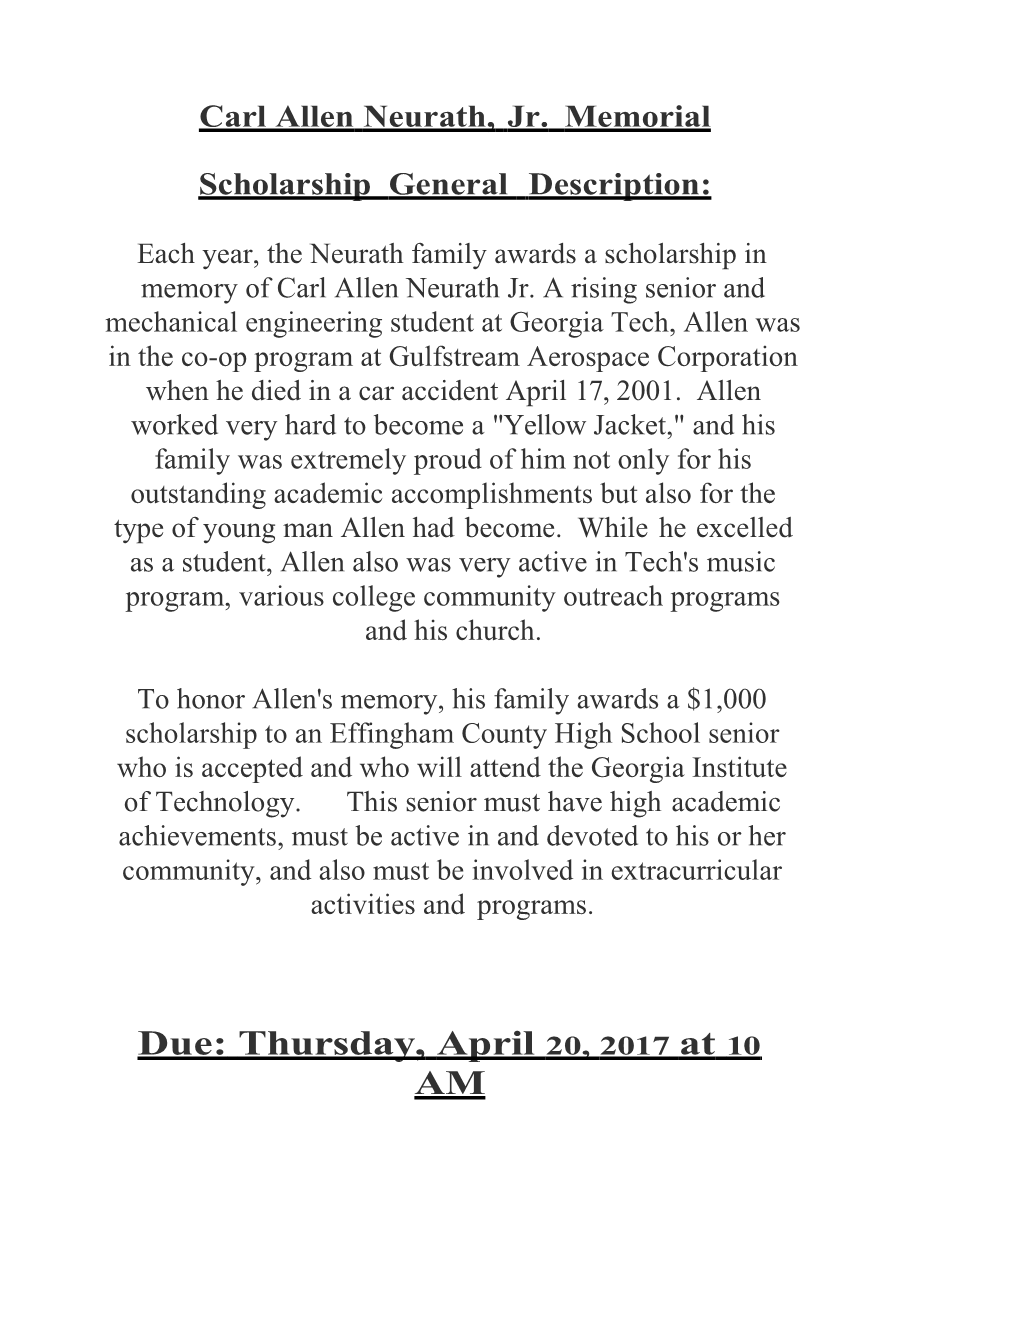 Application for Carl Allen Neurath Georgia Tech Scholarship